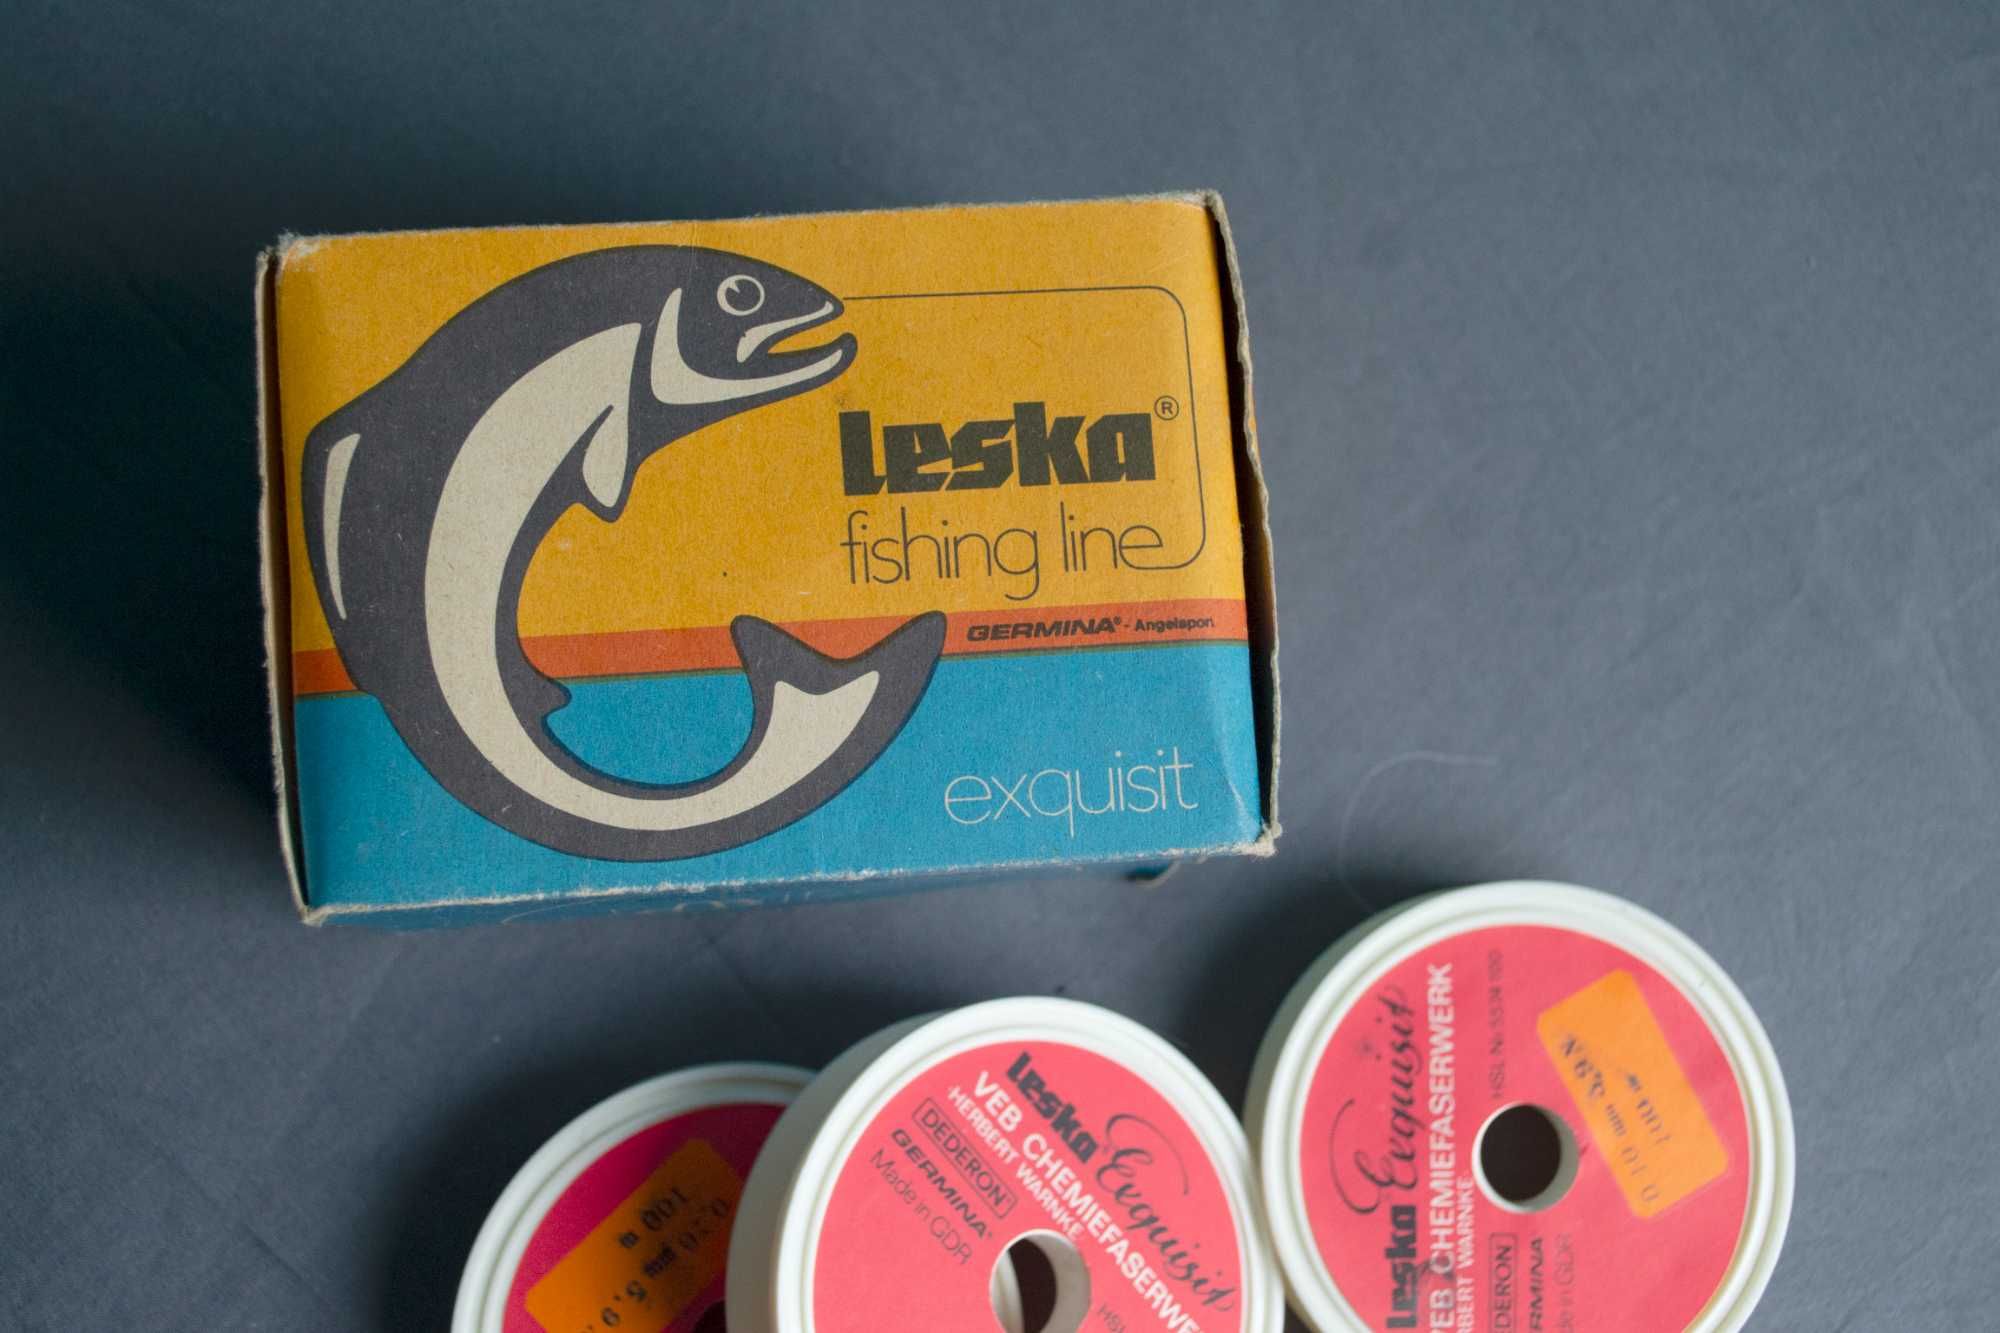 Леска fishing line Germina 1 упаковка, 5 штук